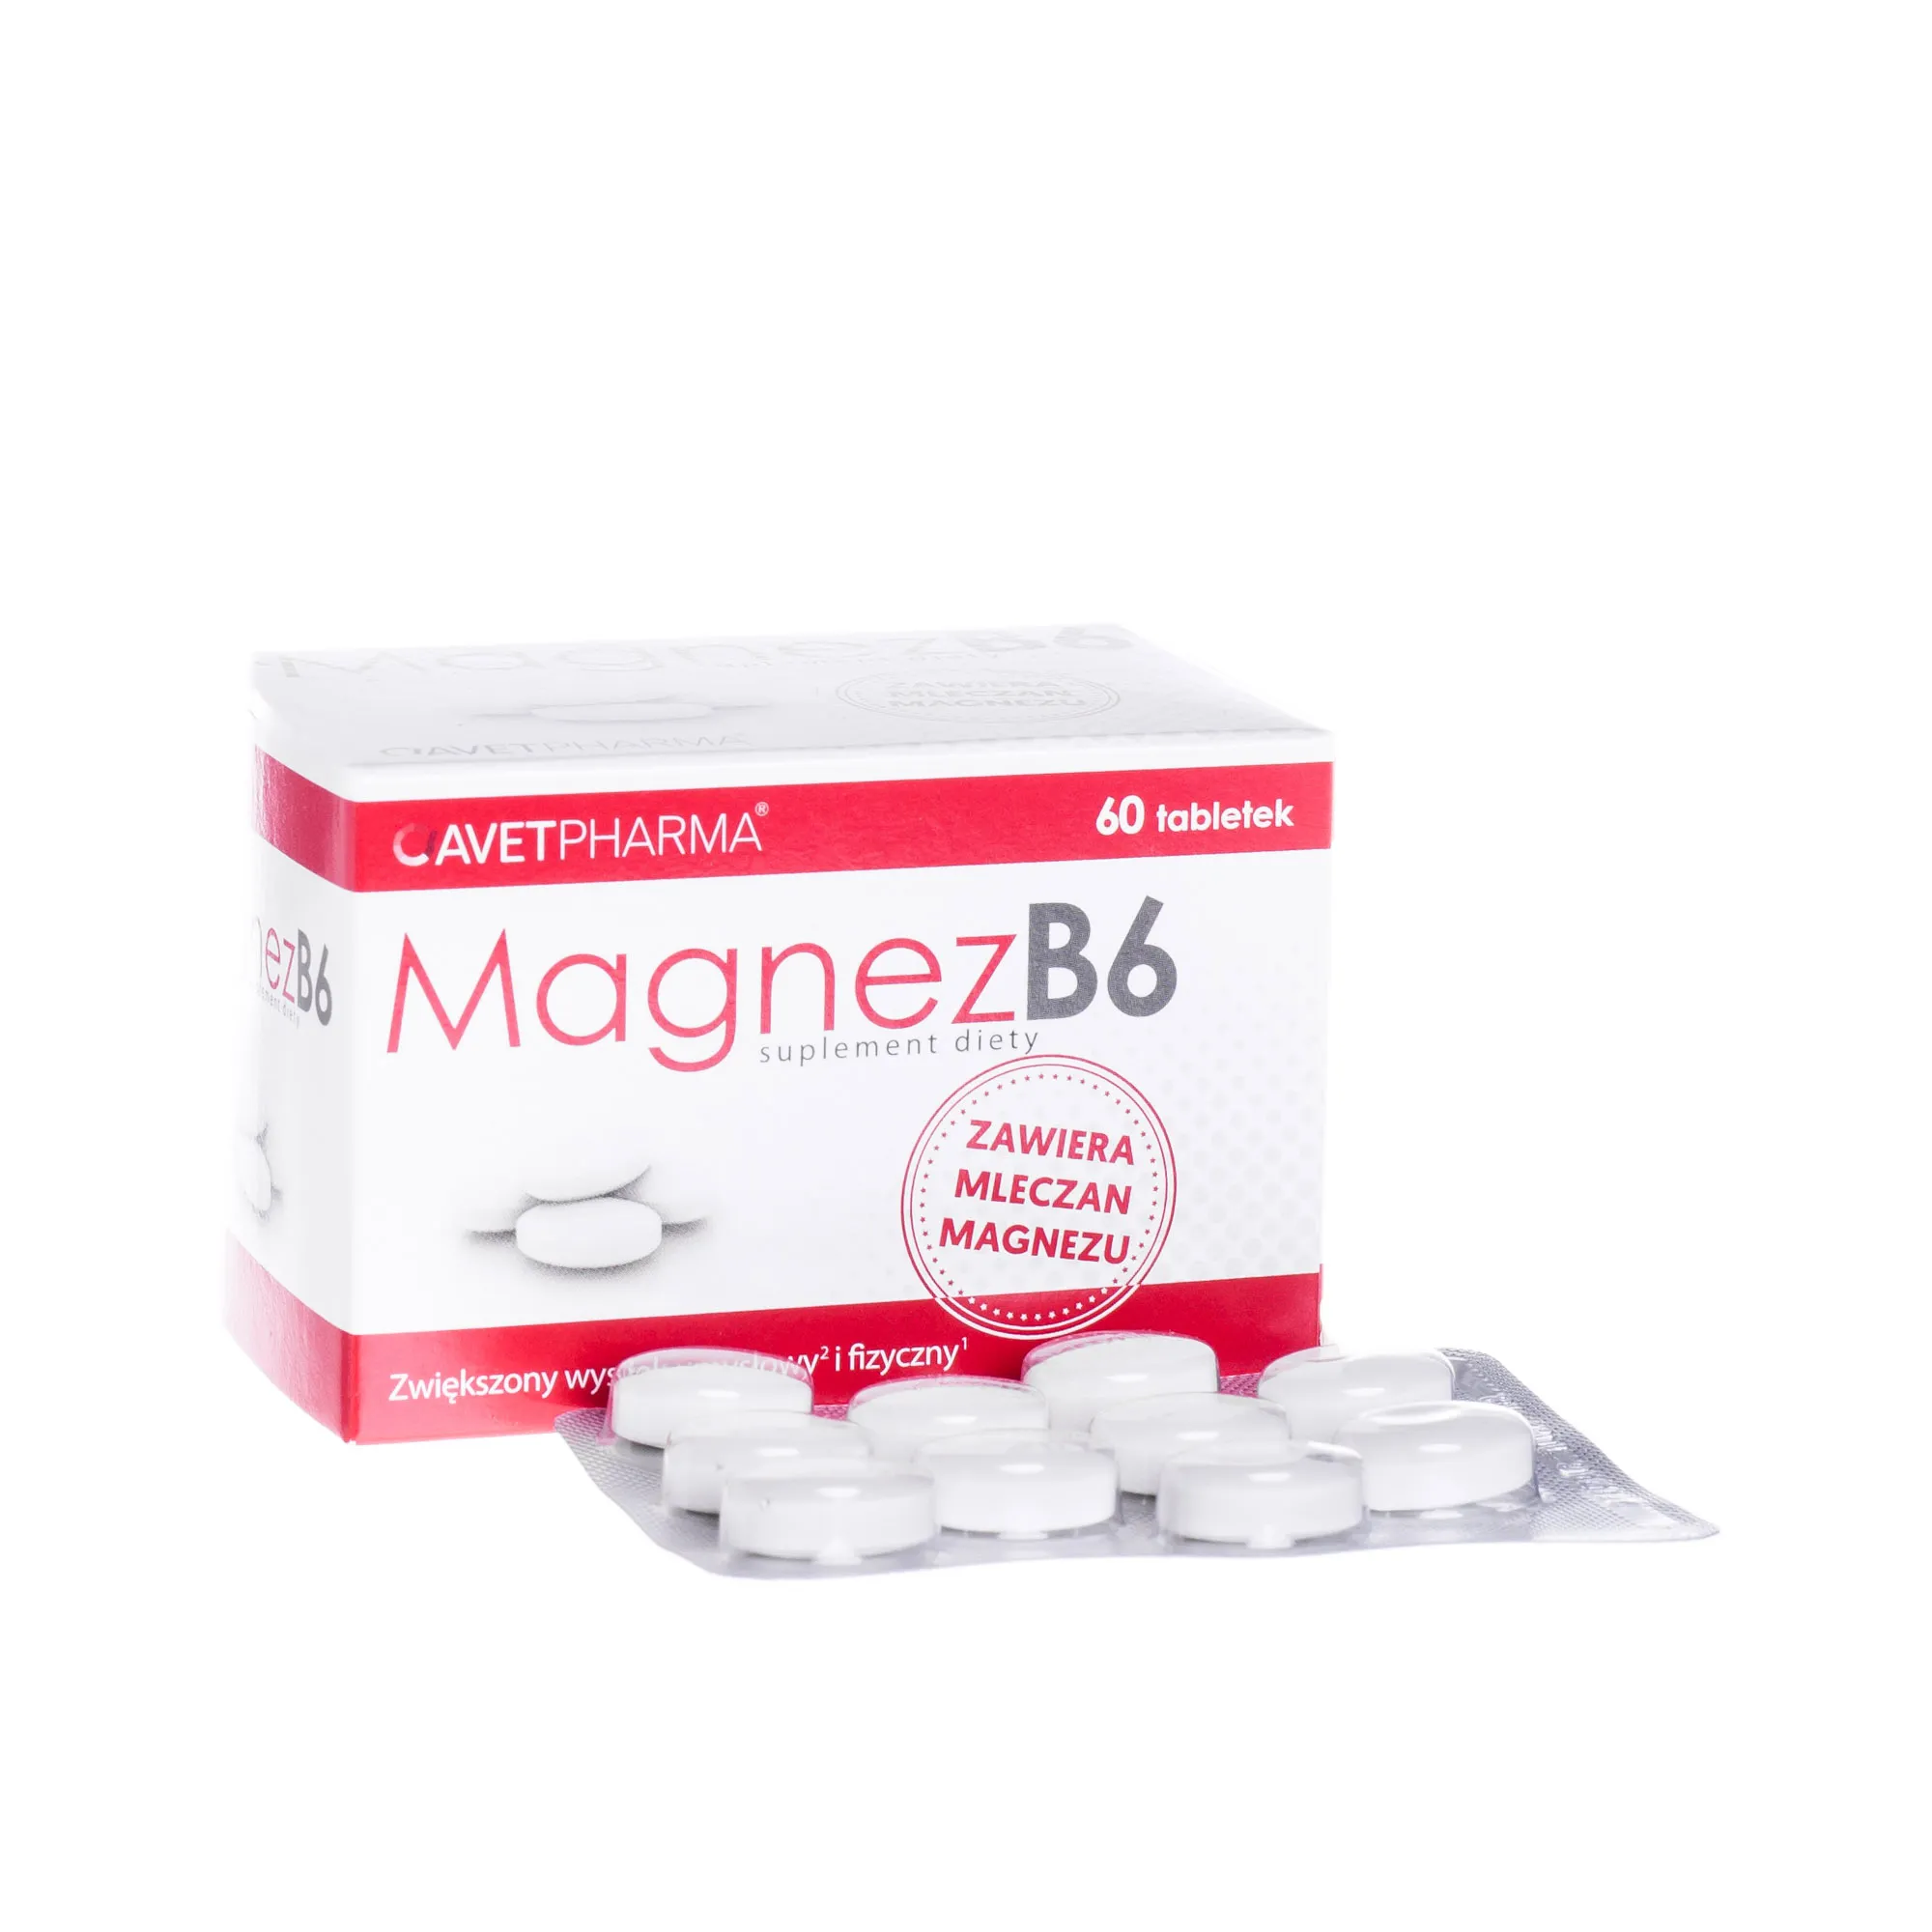 Magnez B6, suplement diety, 60 tabletek